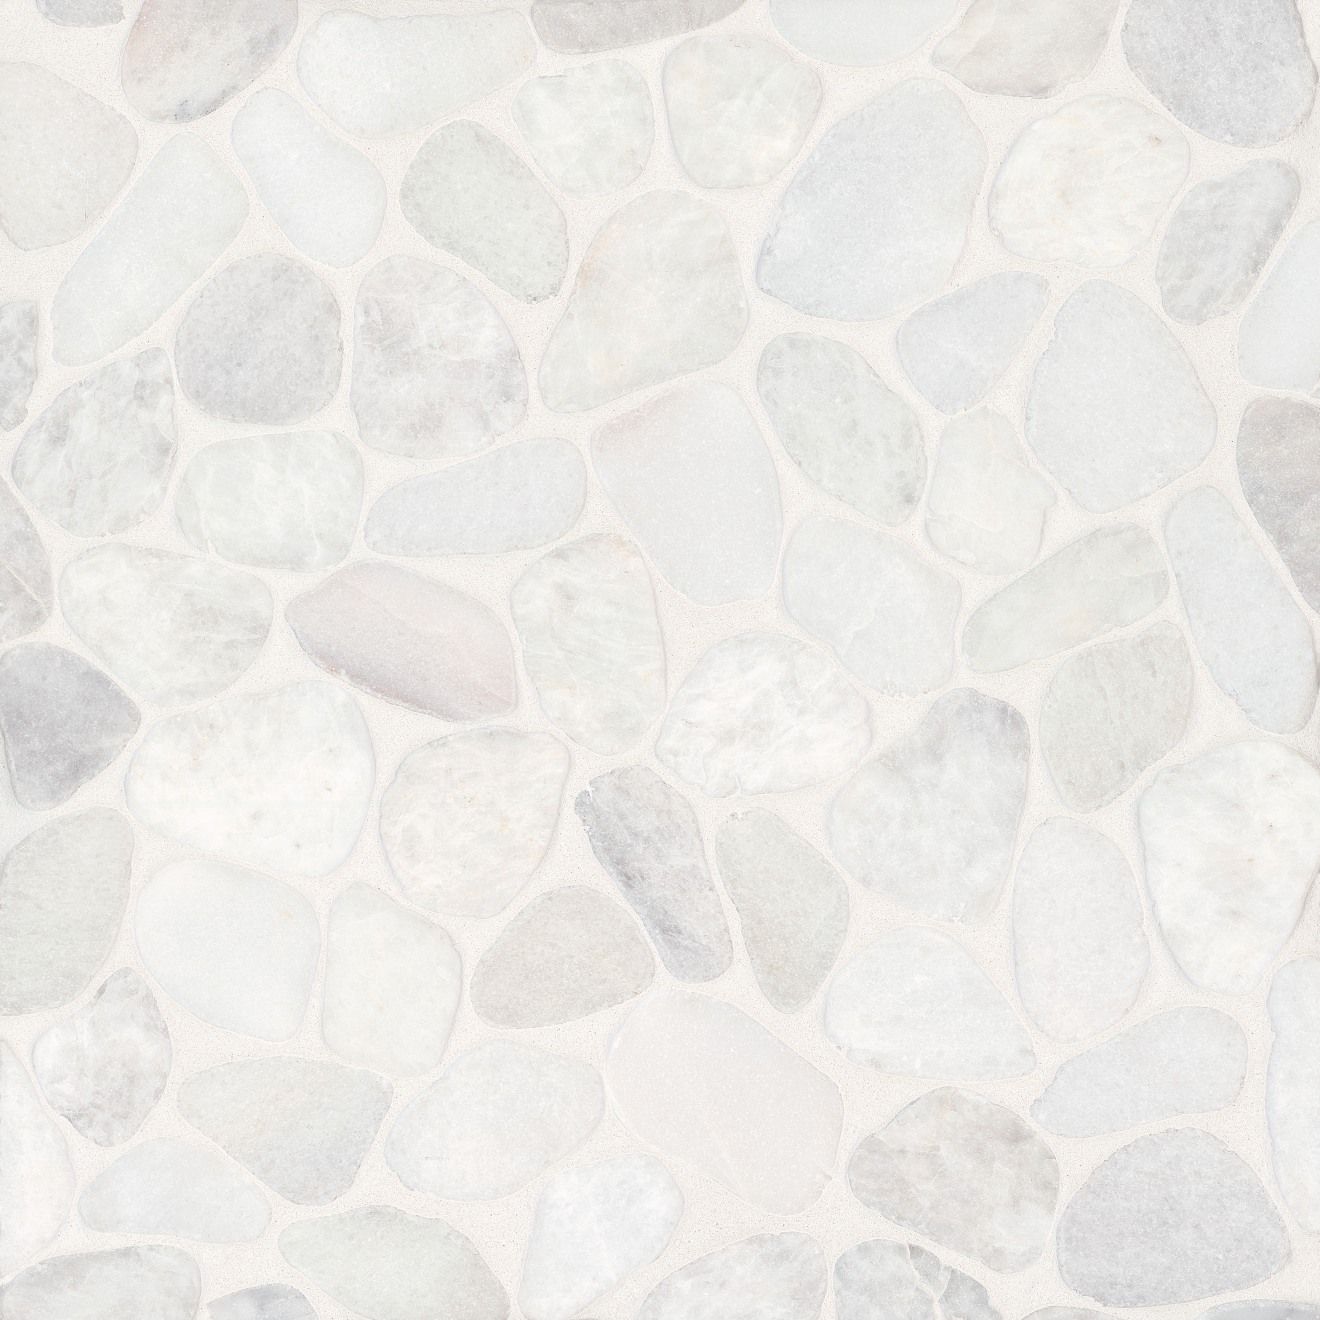 Waterbrook Medium Sliced Pebble Mosaic in Thassos | Bedrosians Tile & Stone